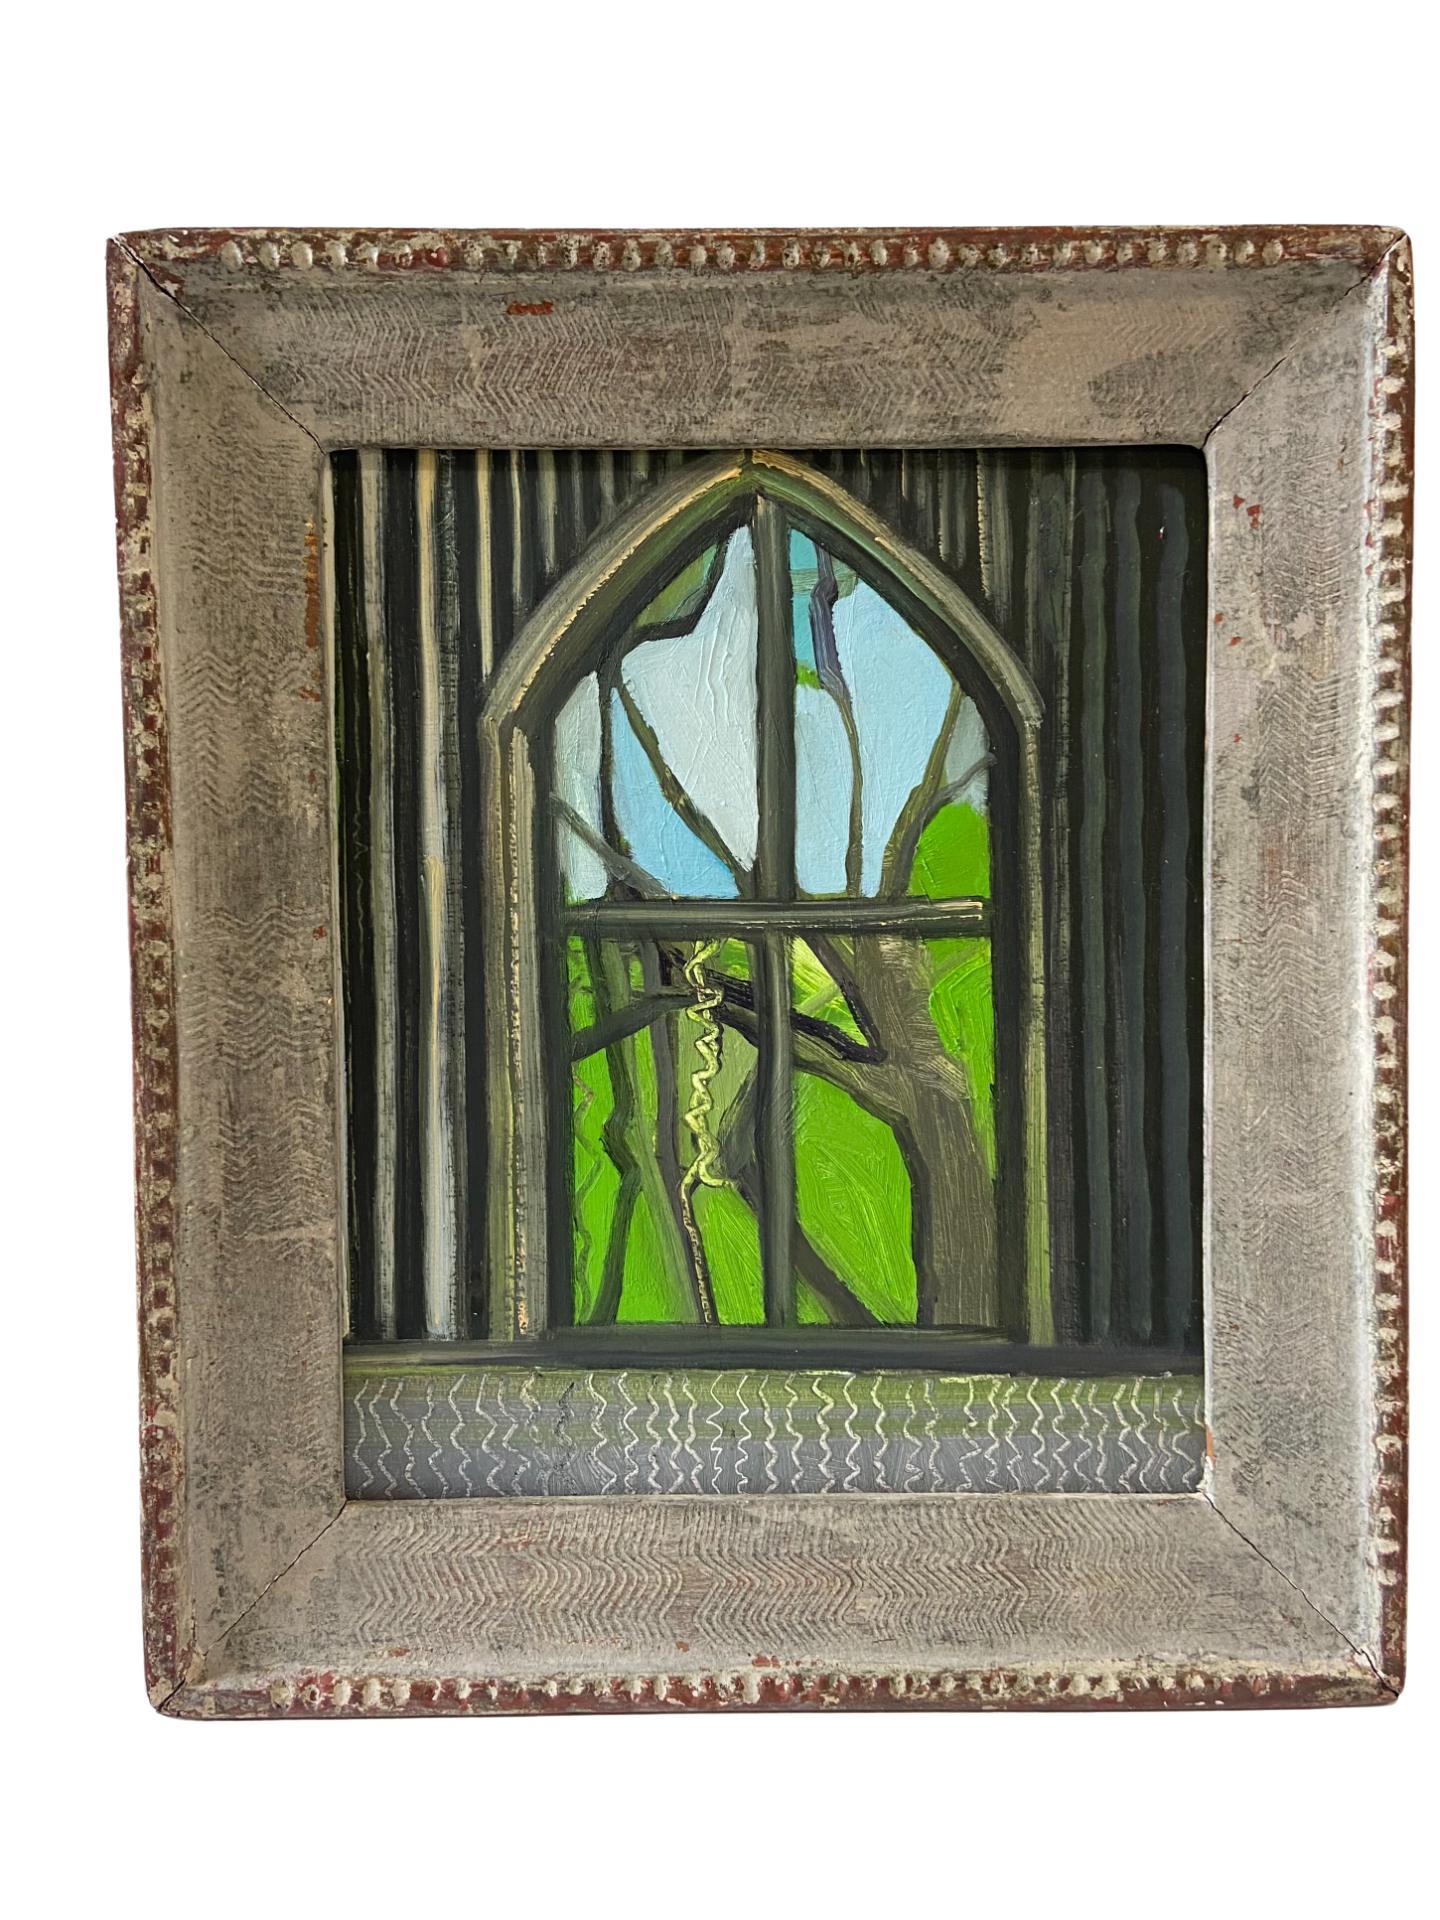 "The Gothic Window